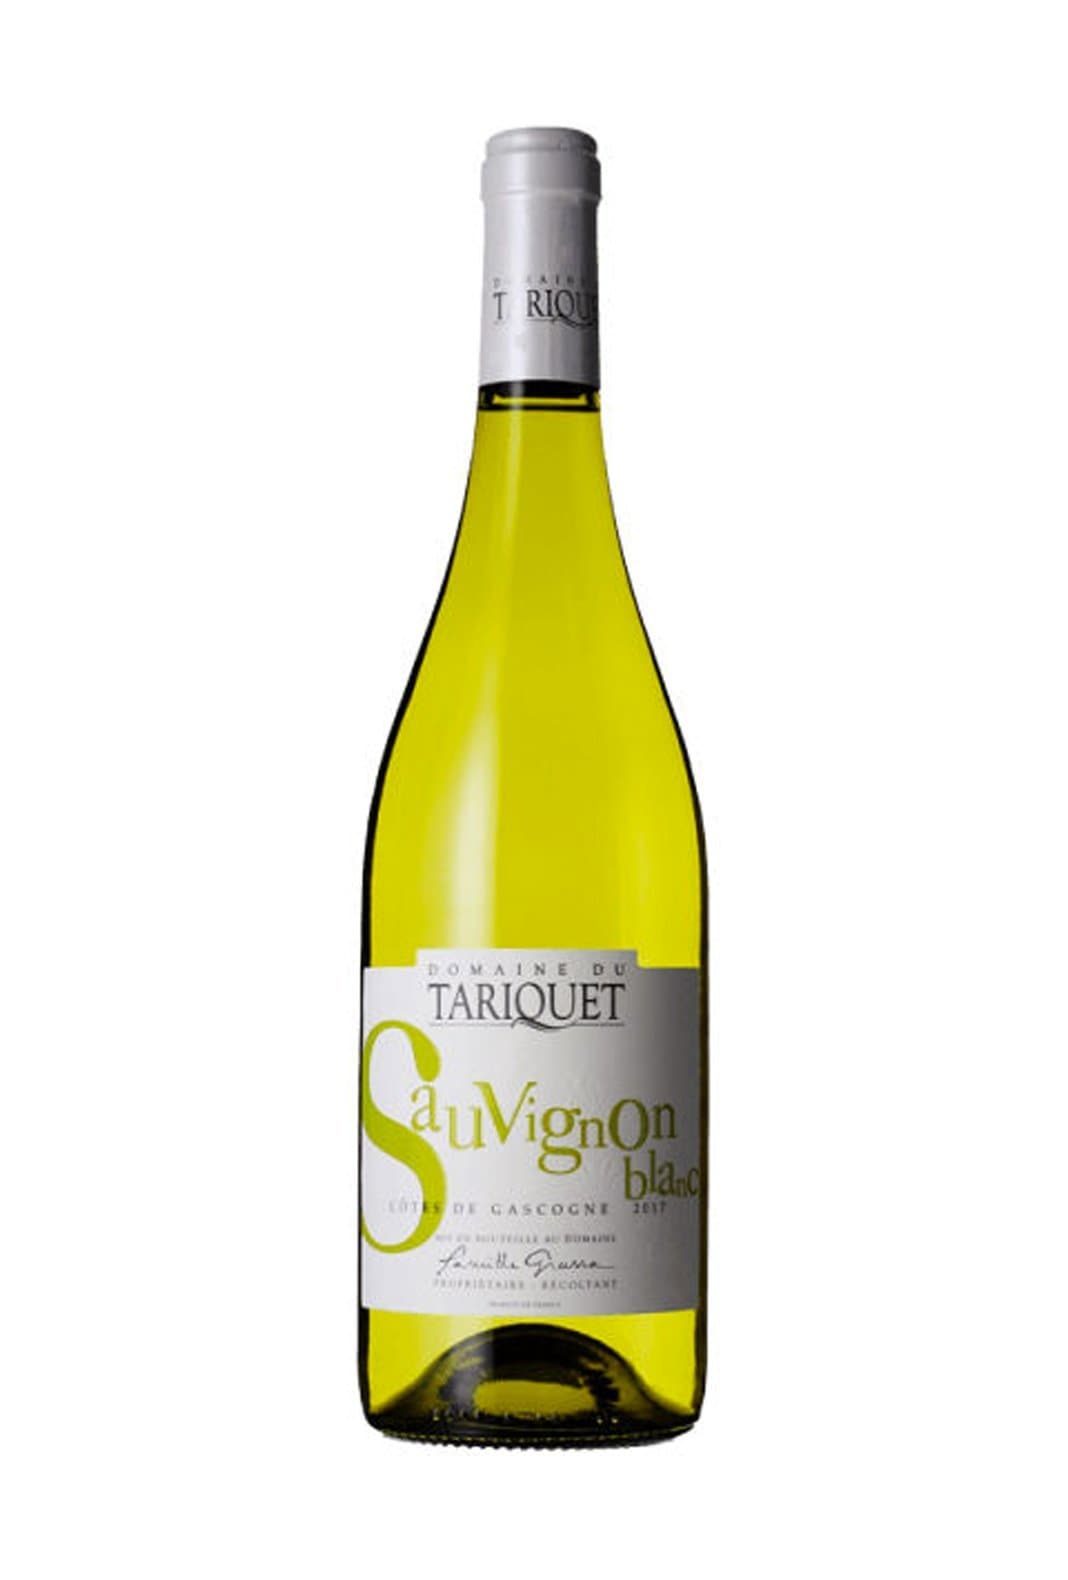 Domaine Tariquet Wine Sauvignon Blanc 750ml | Wine | Shop online at Spirits of France